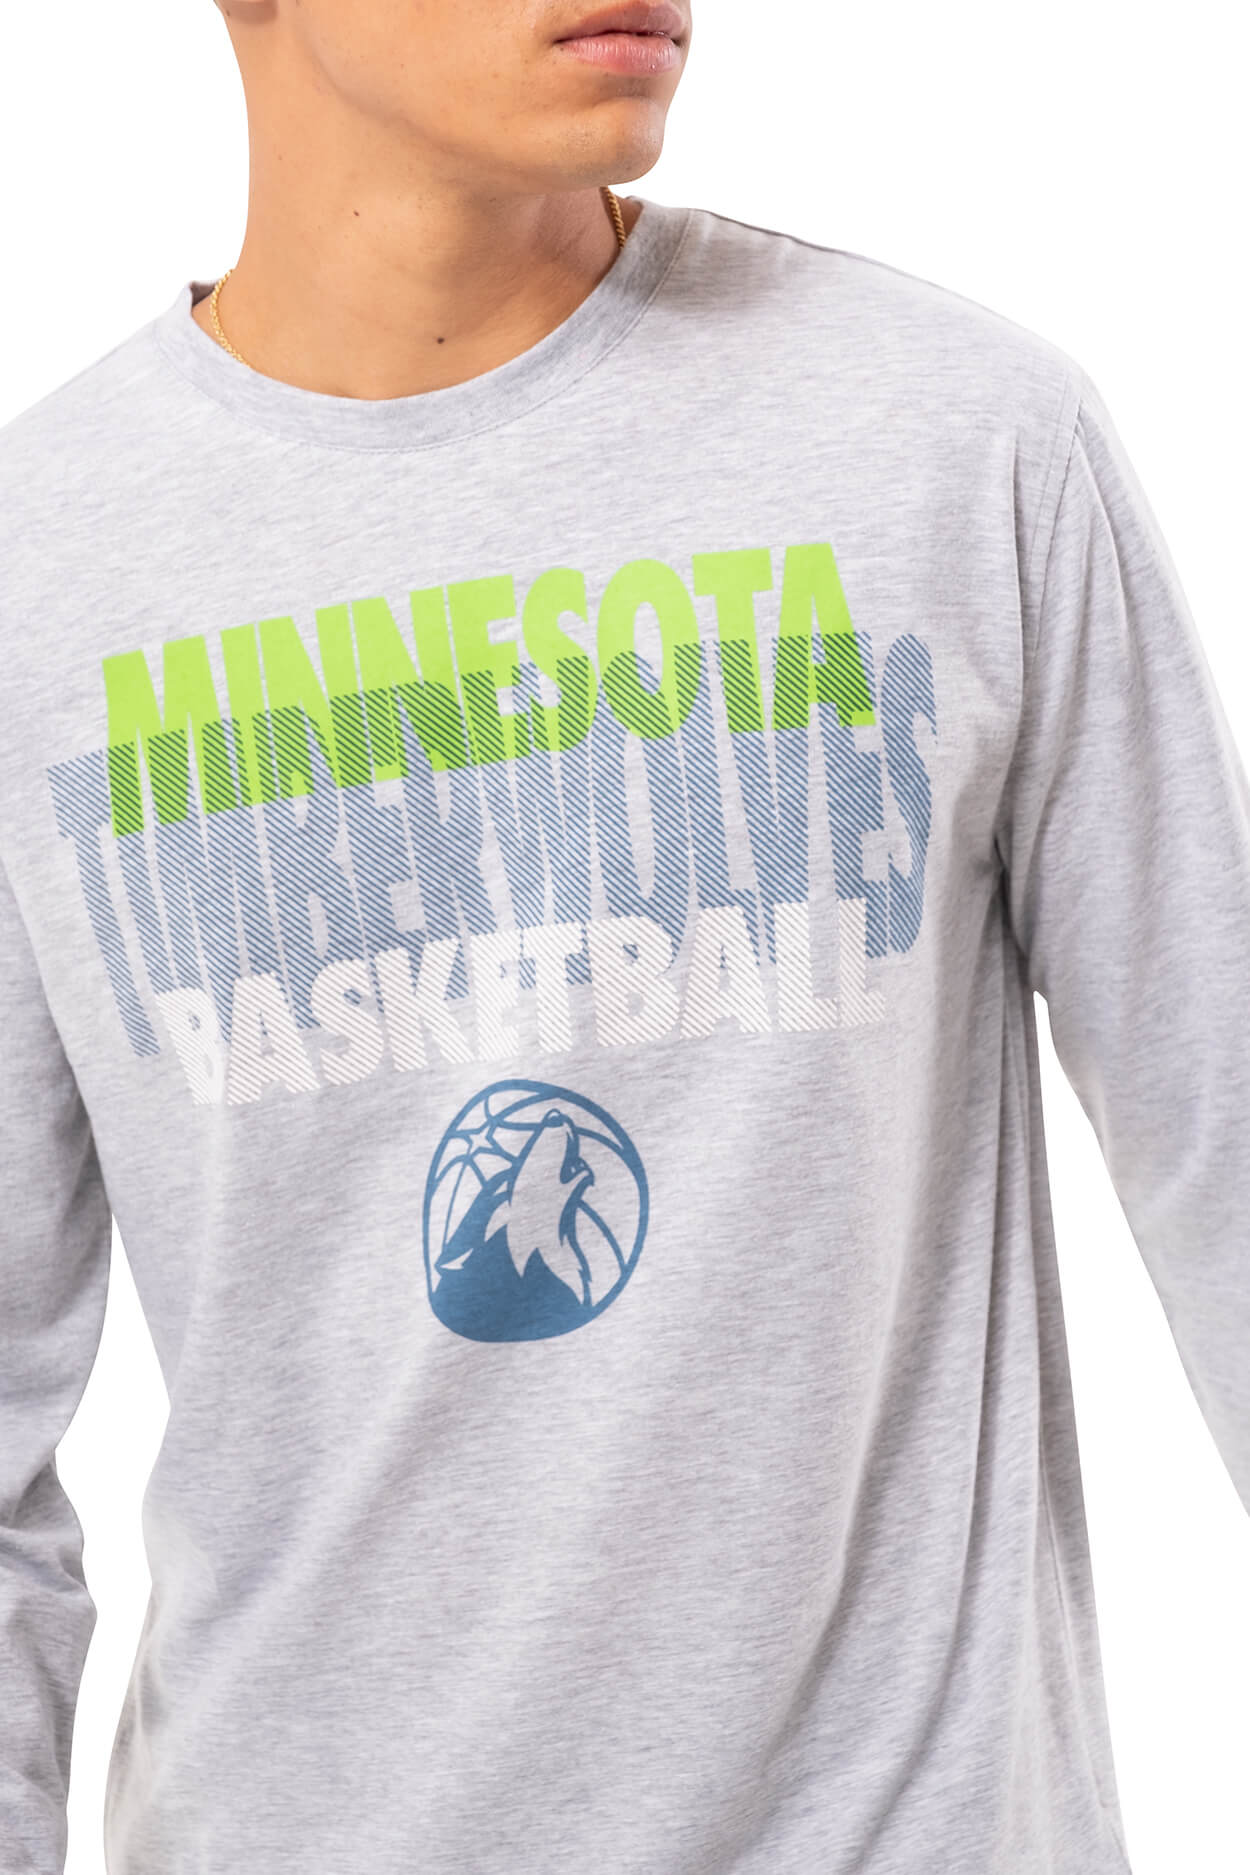 NBA Minnesota Timberwolves Men's Long Sleeve Pullover|Minnesota Timberwolves